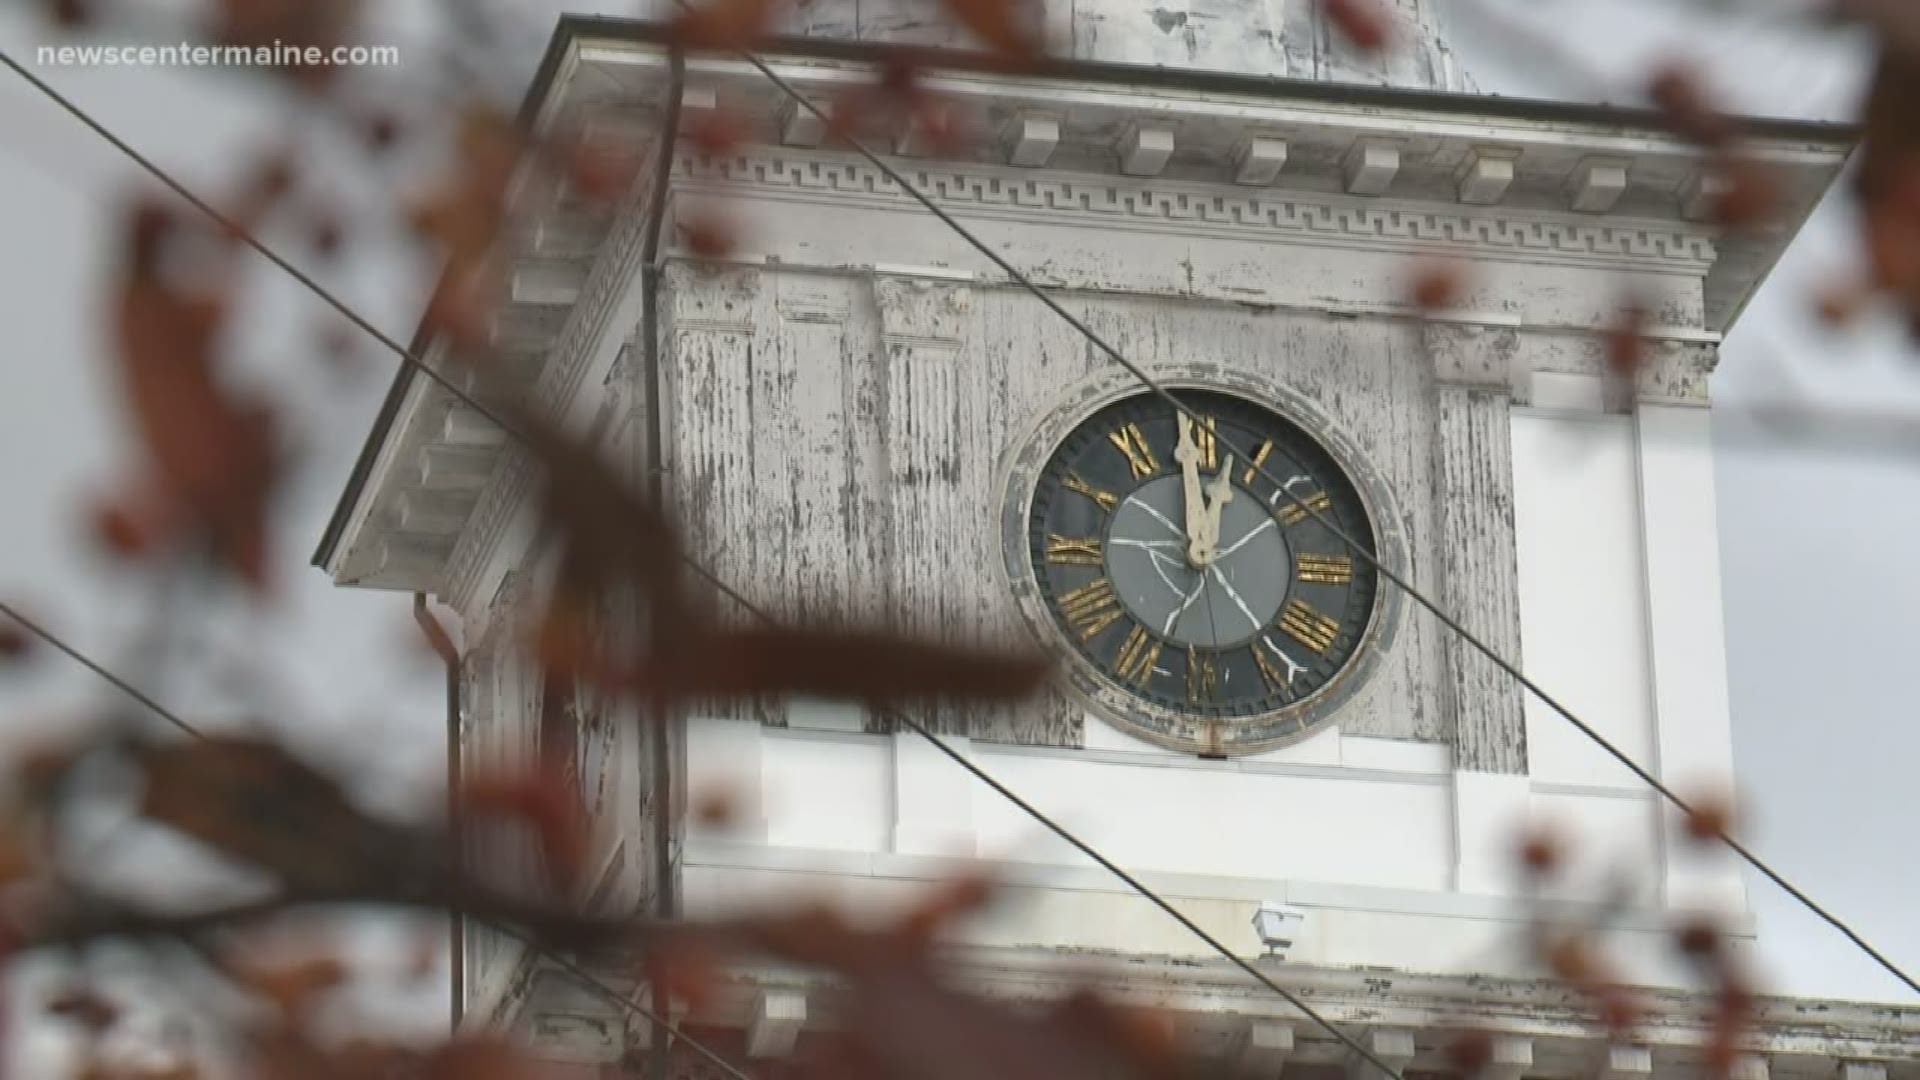 Biddeford City Hall clock tower mechanics restored